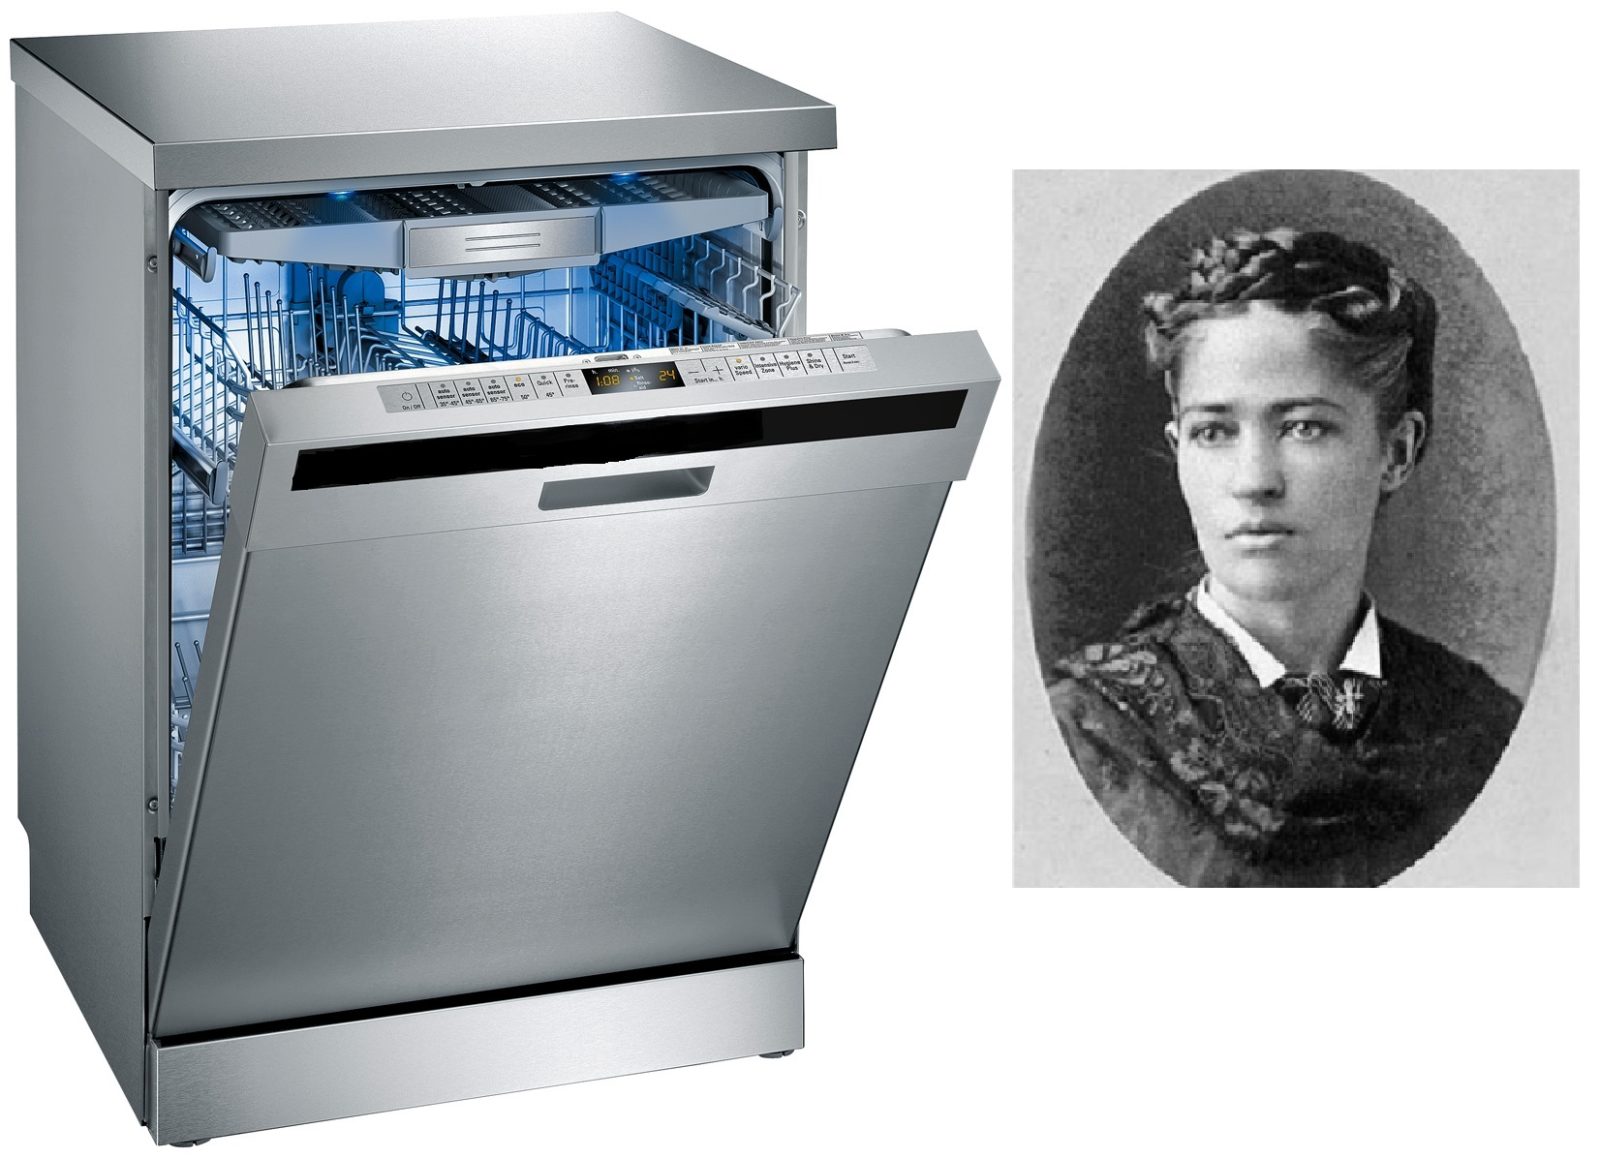 Quem inventou a máquina de lavar louça?